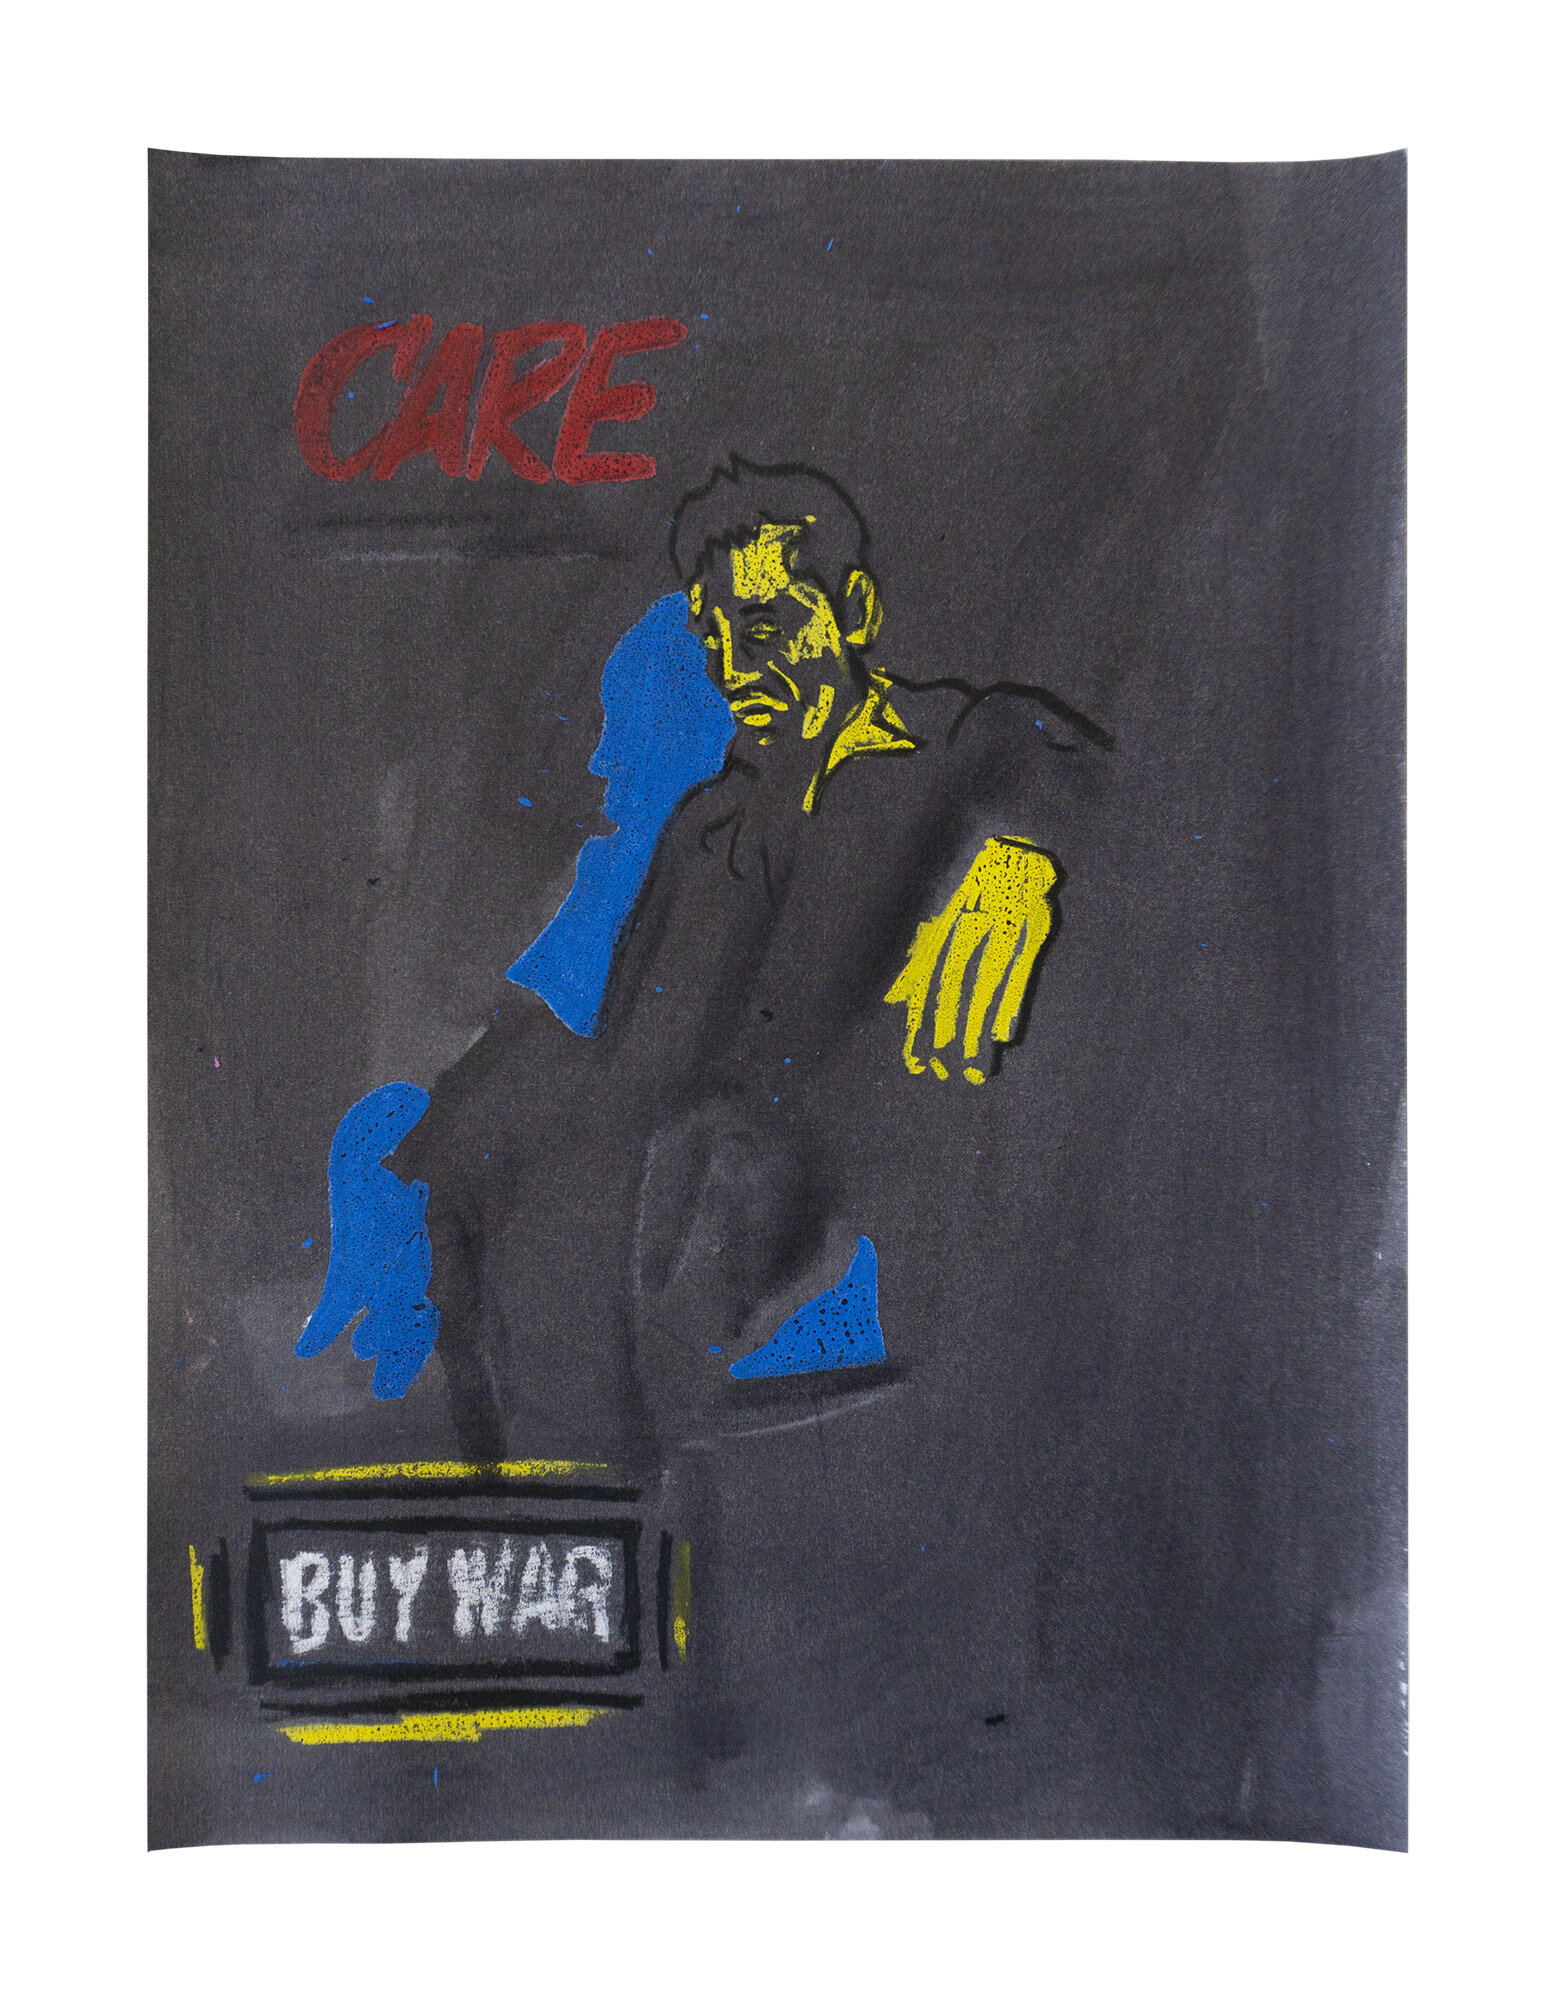 Buy War.jpg